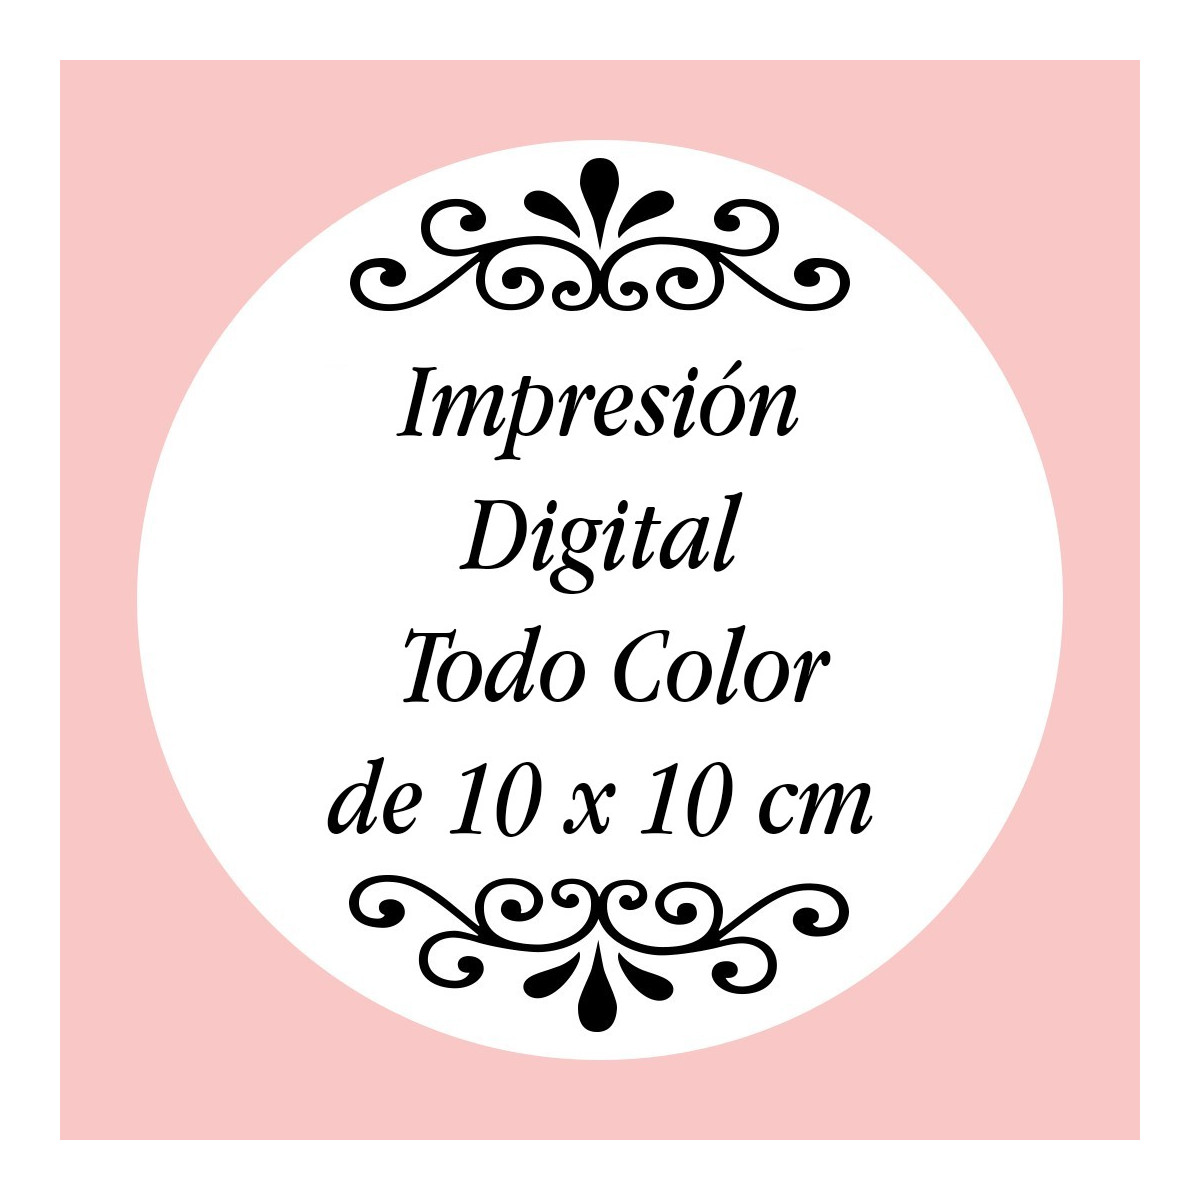 Personalización con impresión digital con texto foto o logo a todo color de 10 x 10 cm